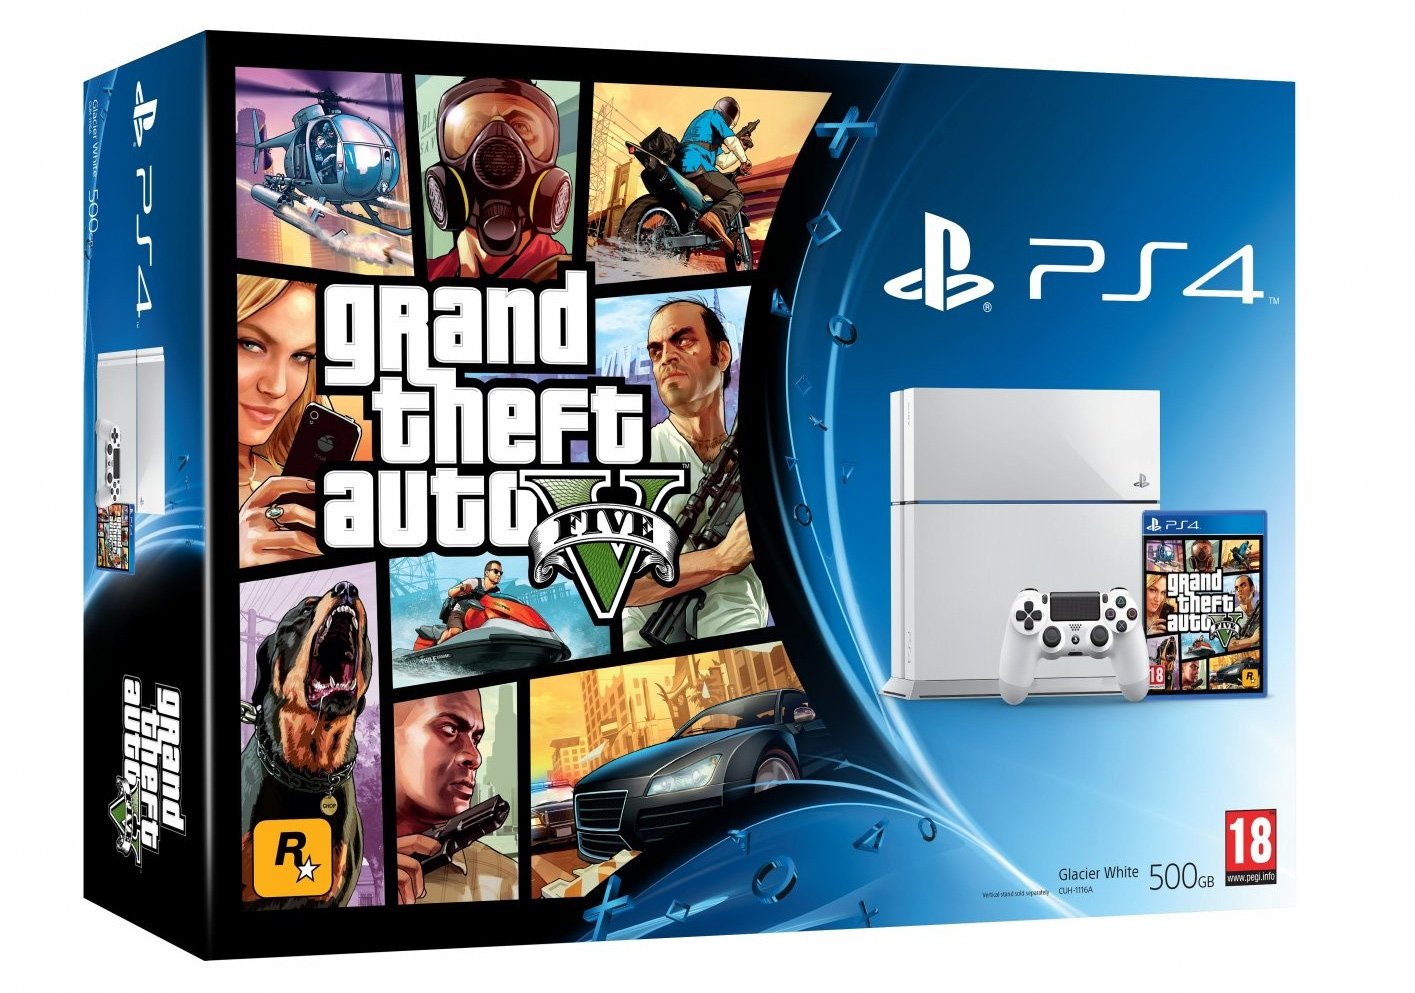 PlayStation 4 500 GB Grand Theft Auto V Bundle Glacier White